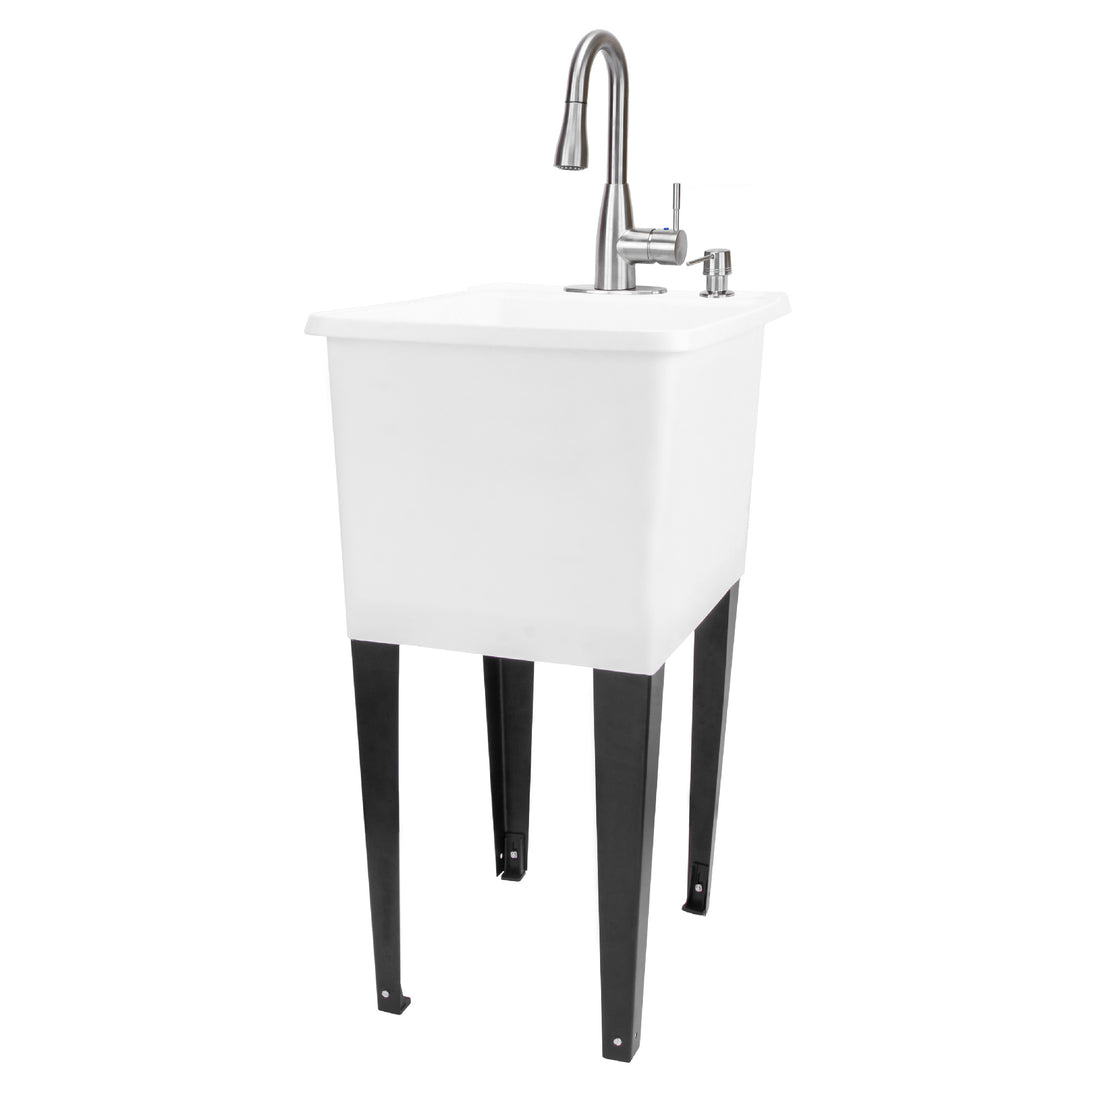 Tehila Space Saver Freestanding White Utility Sink with Stainless Steel Finish Low-Profile Pull-Down Faucet - Utility sinks vanites Tehila